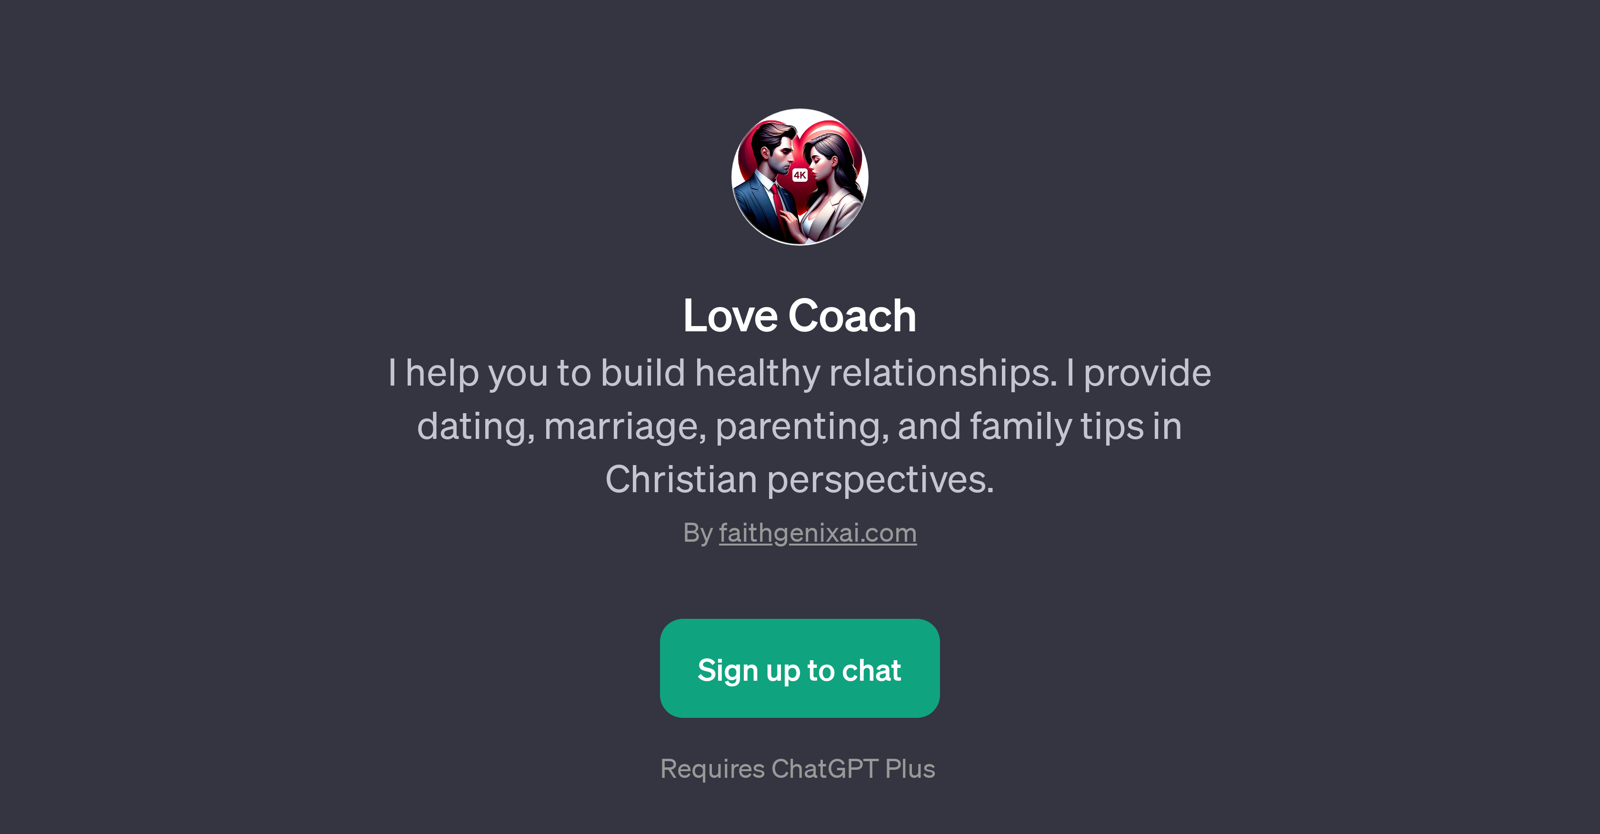 Love Coach website